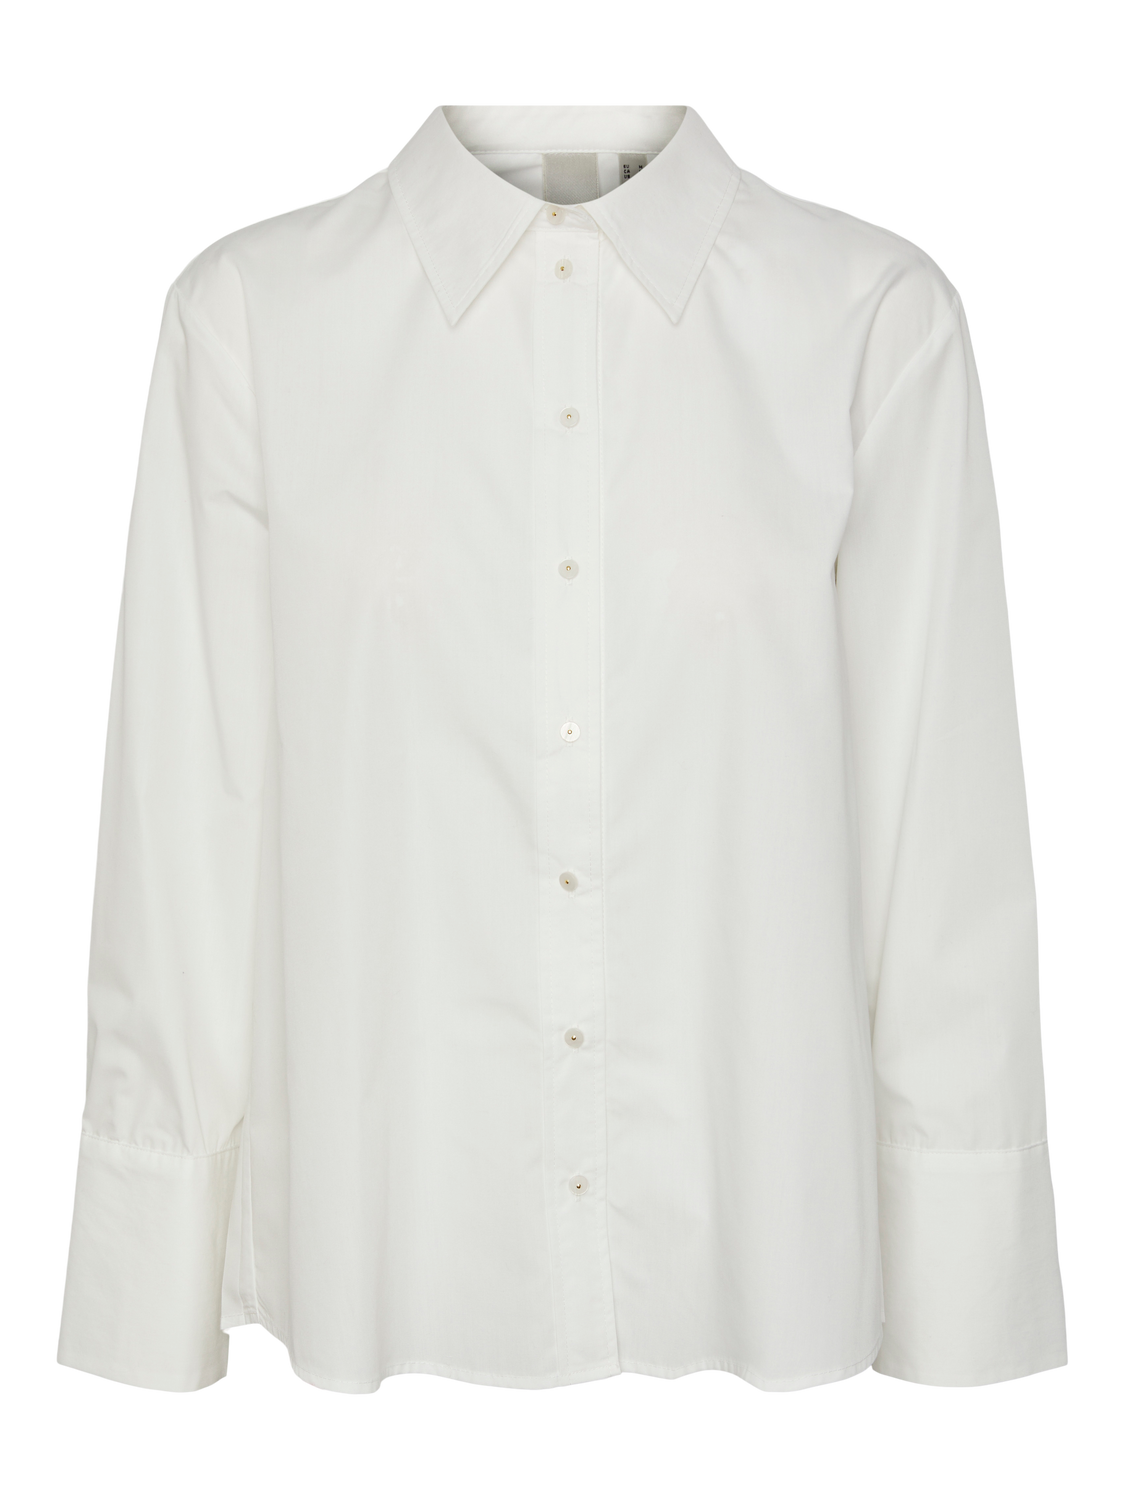 YASROYA Shirts - Star White